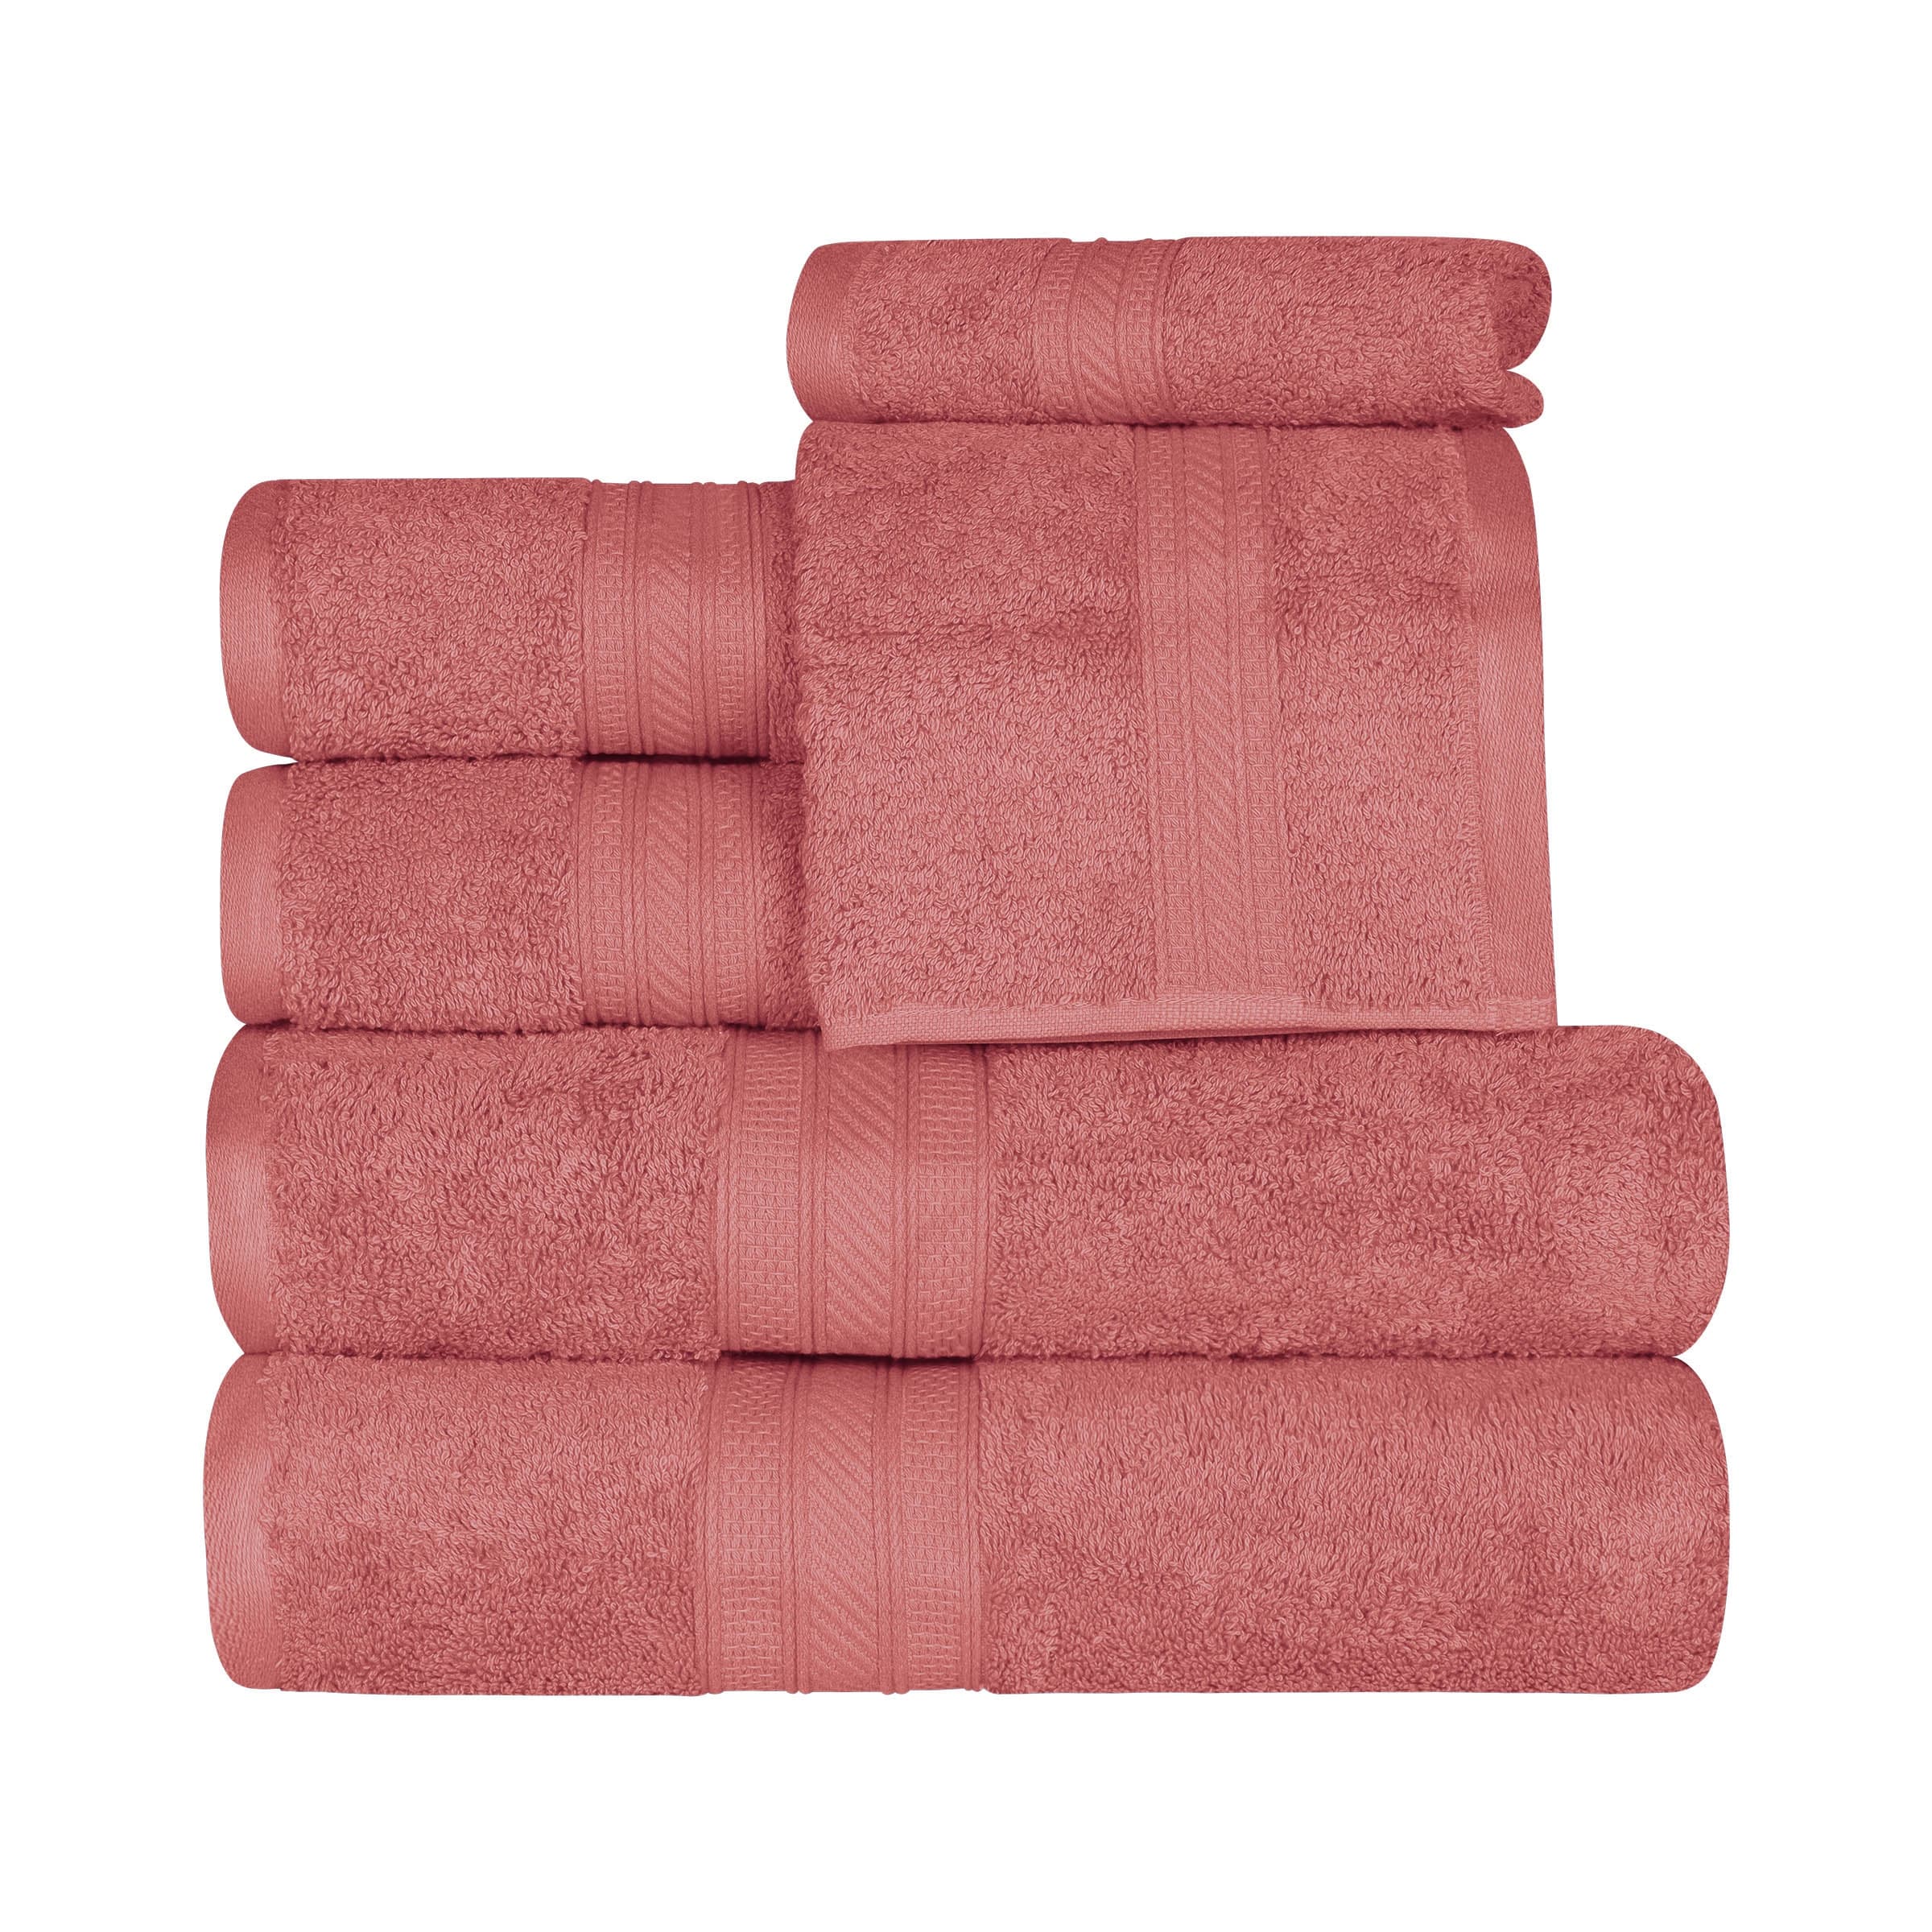 New Long-Staple Cotton Towel Set Star Hotel Luxury Satin Towel Bath Towel  Home Super Soft Absorbent Bathroom Face Towels - AliExpress